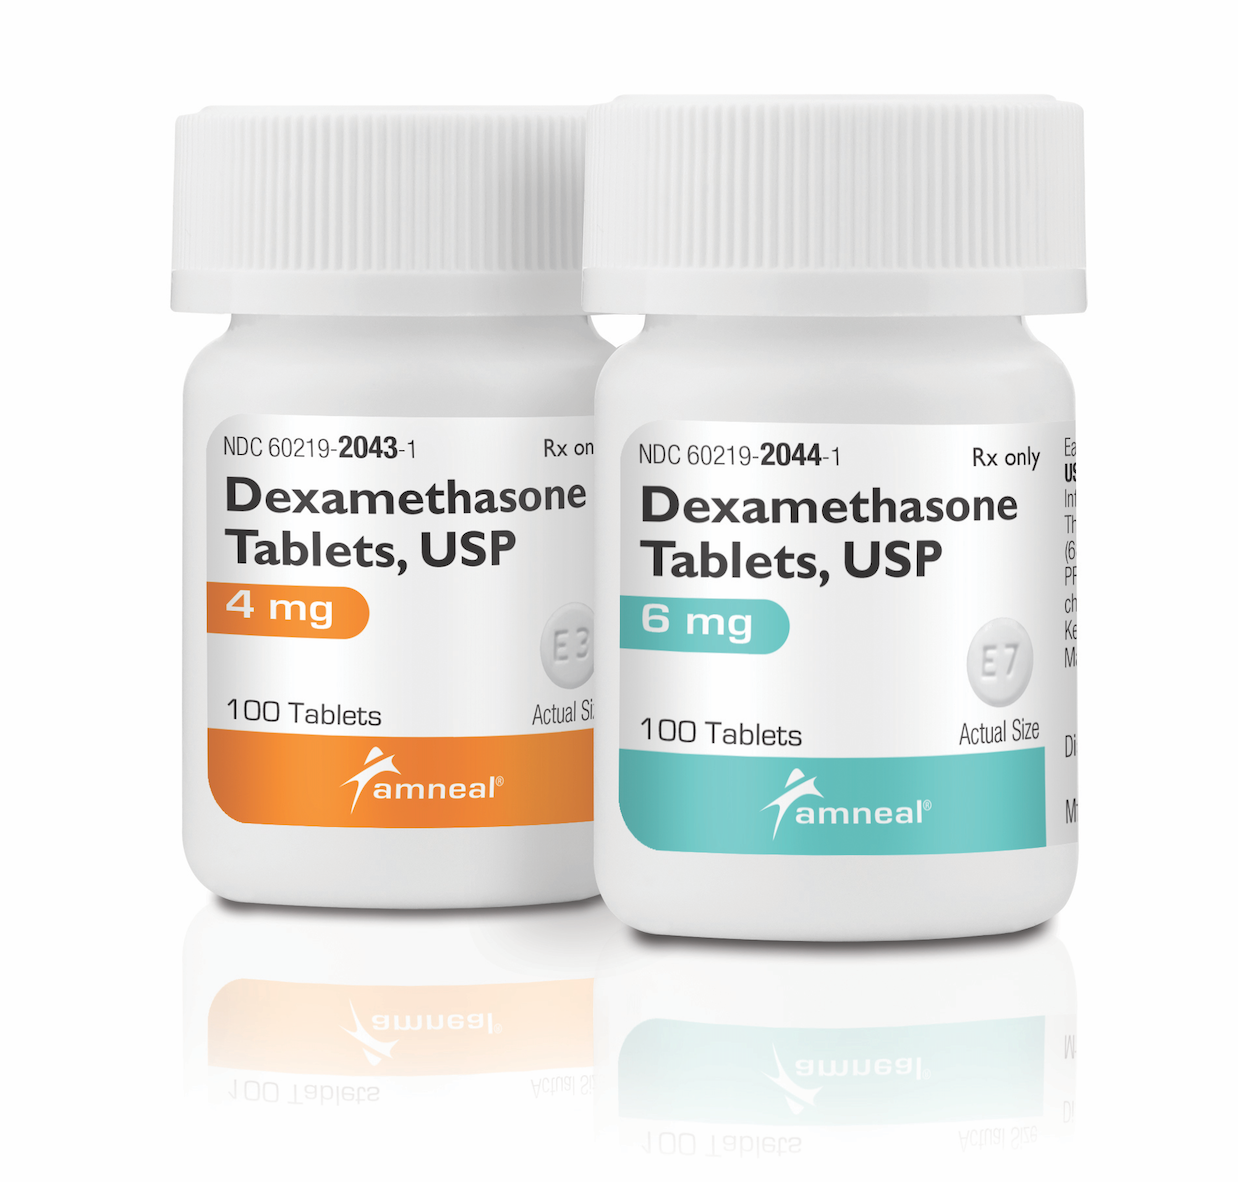 Amneal Launches Generic Dexamethasone Following ANDA Approval by FDA 